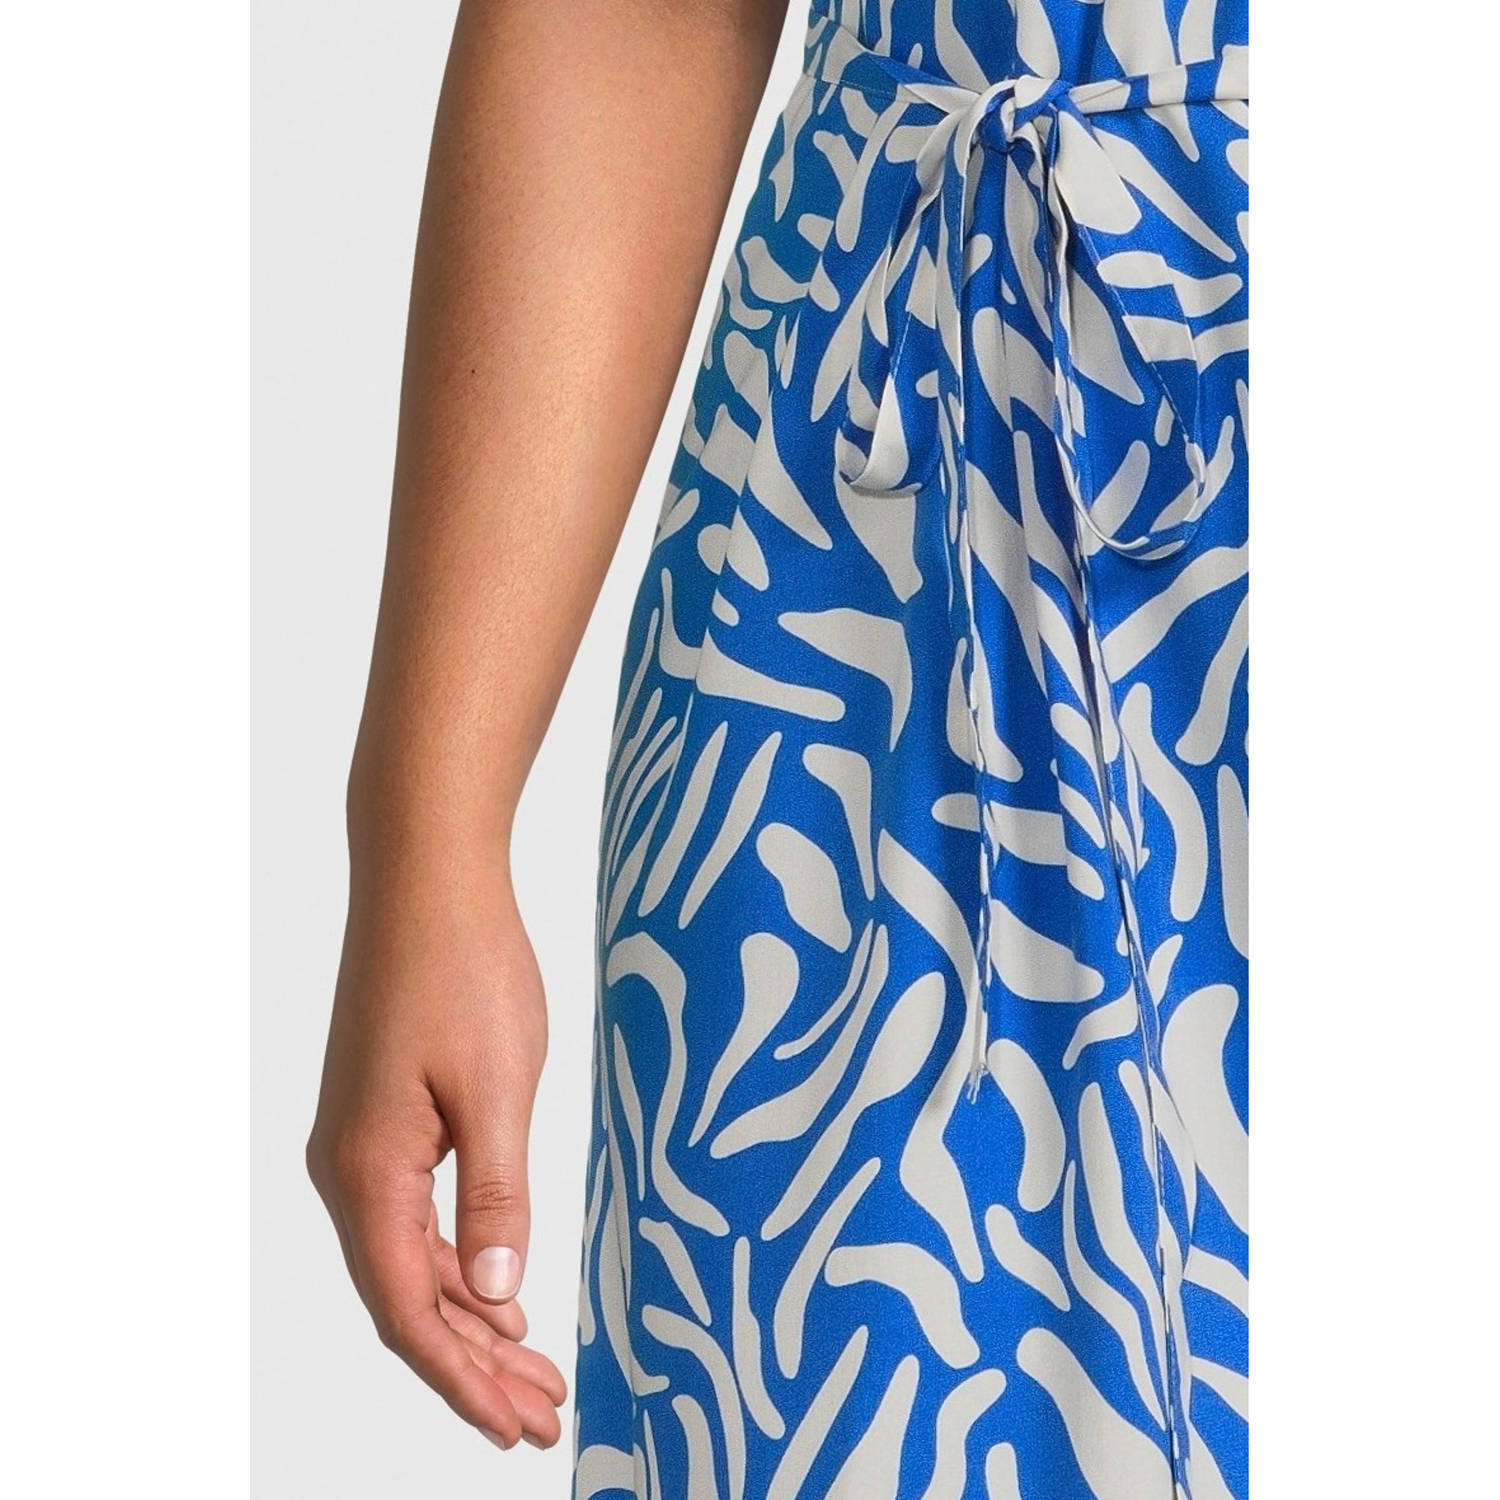 Simple Wish jurk met all over print en ceintuur blauw ecru